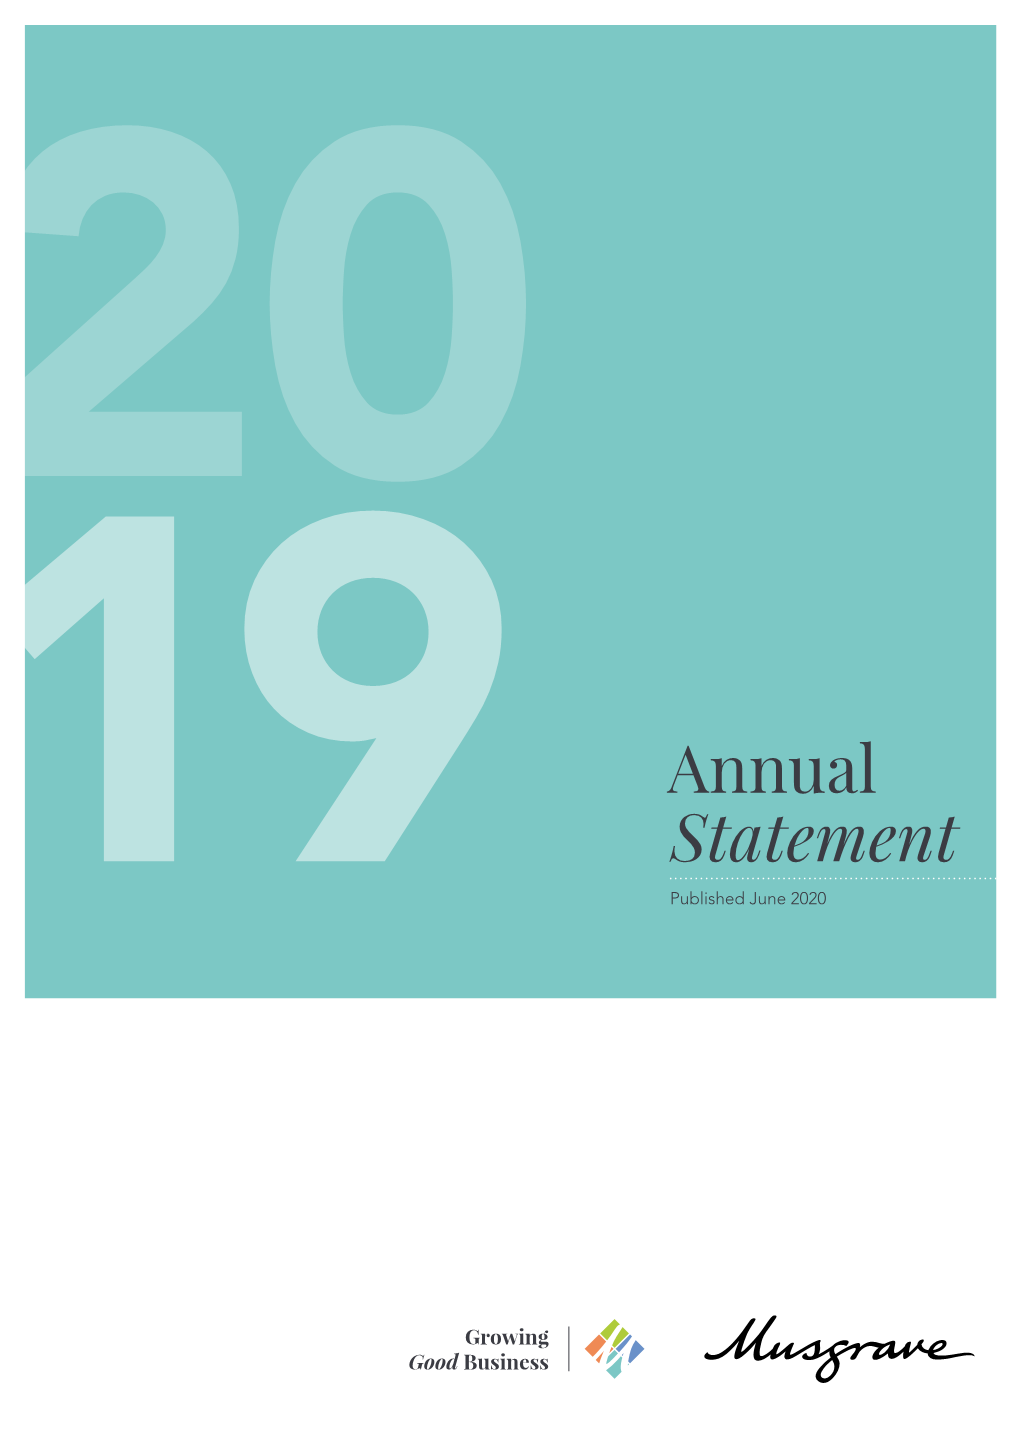 19 Annual Statement